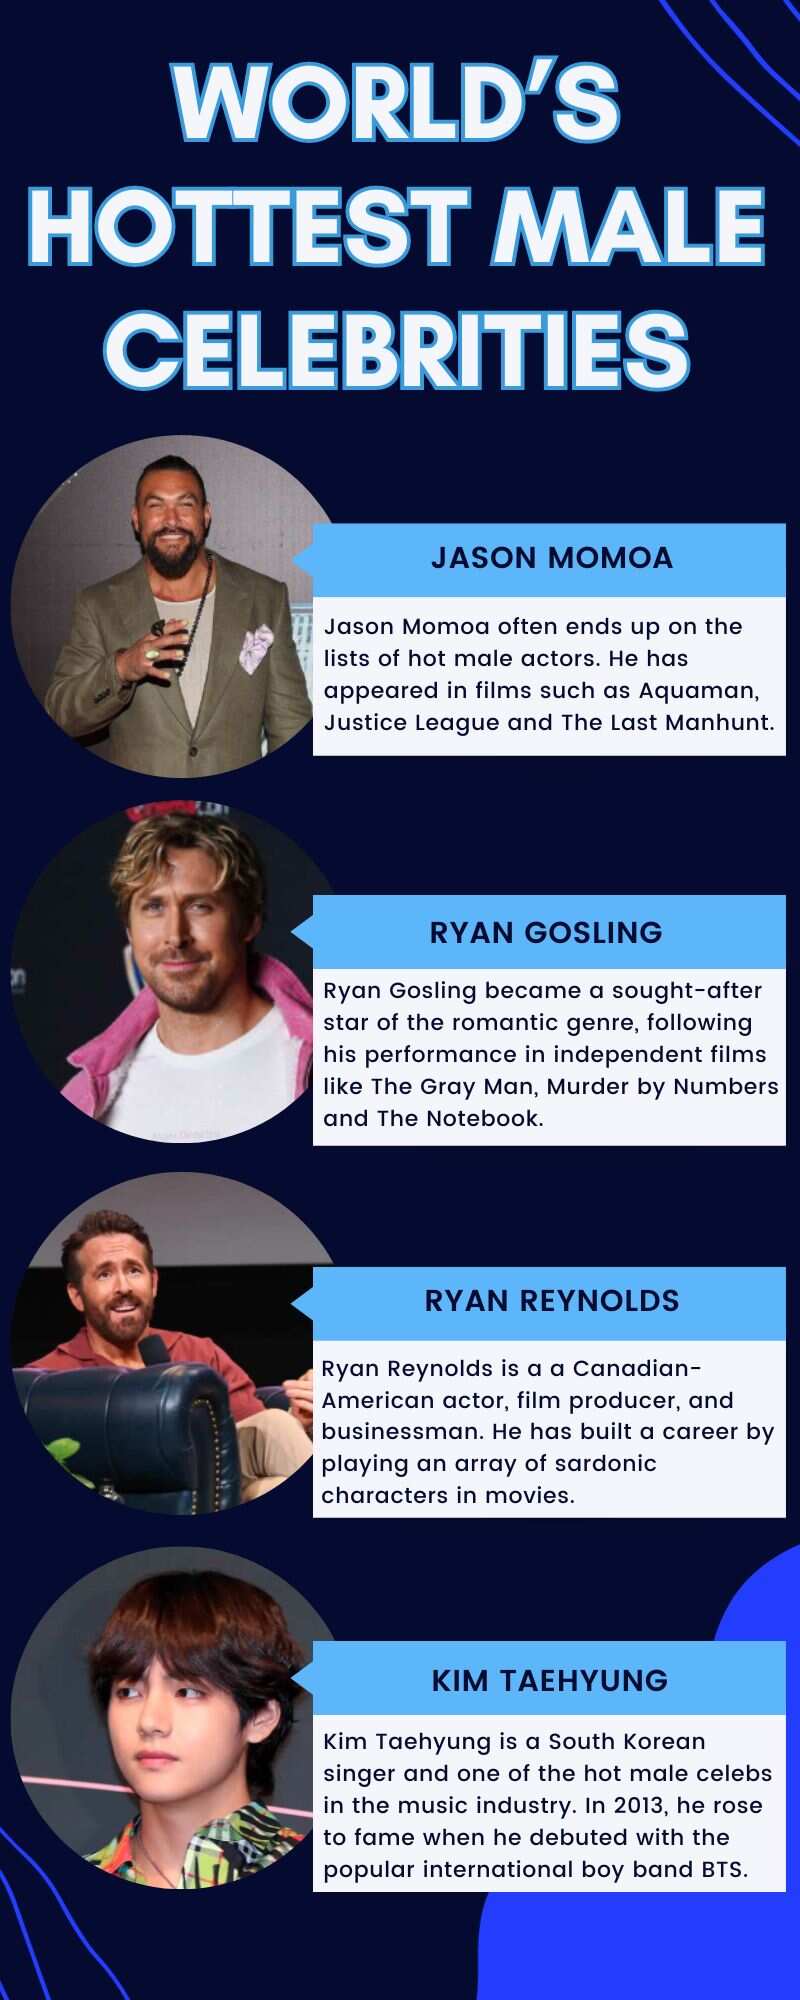 World’s hottest male celebrities